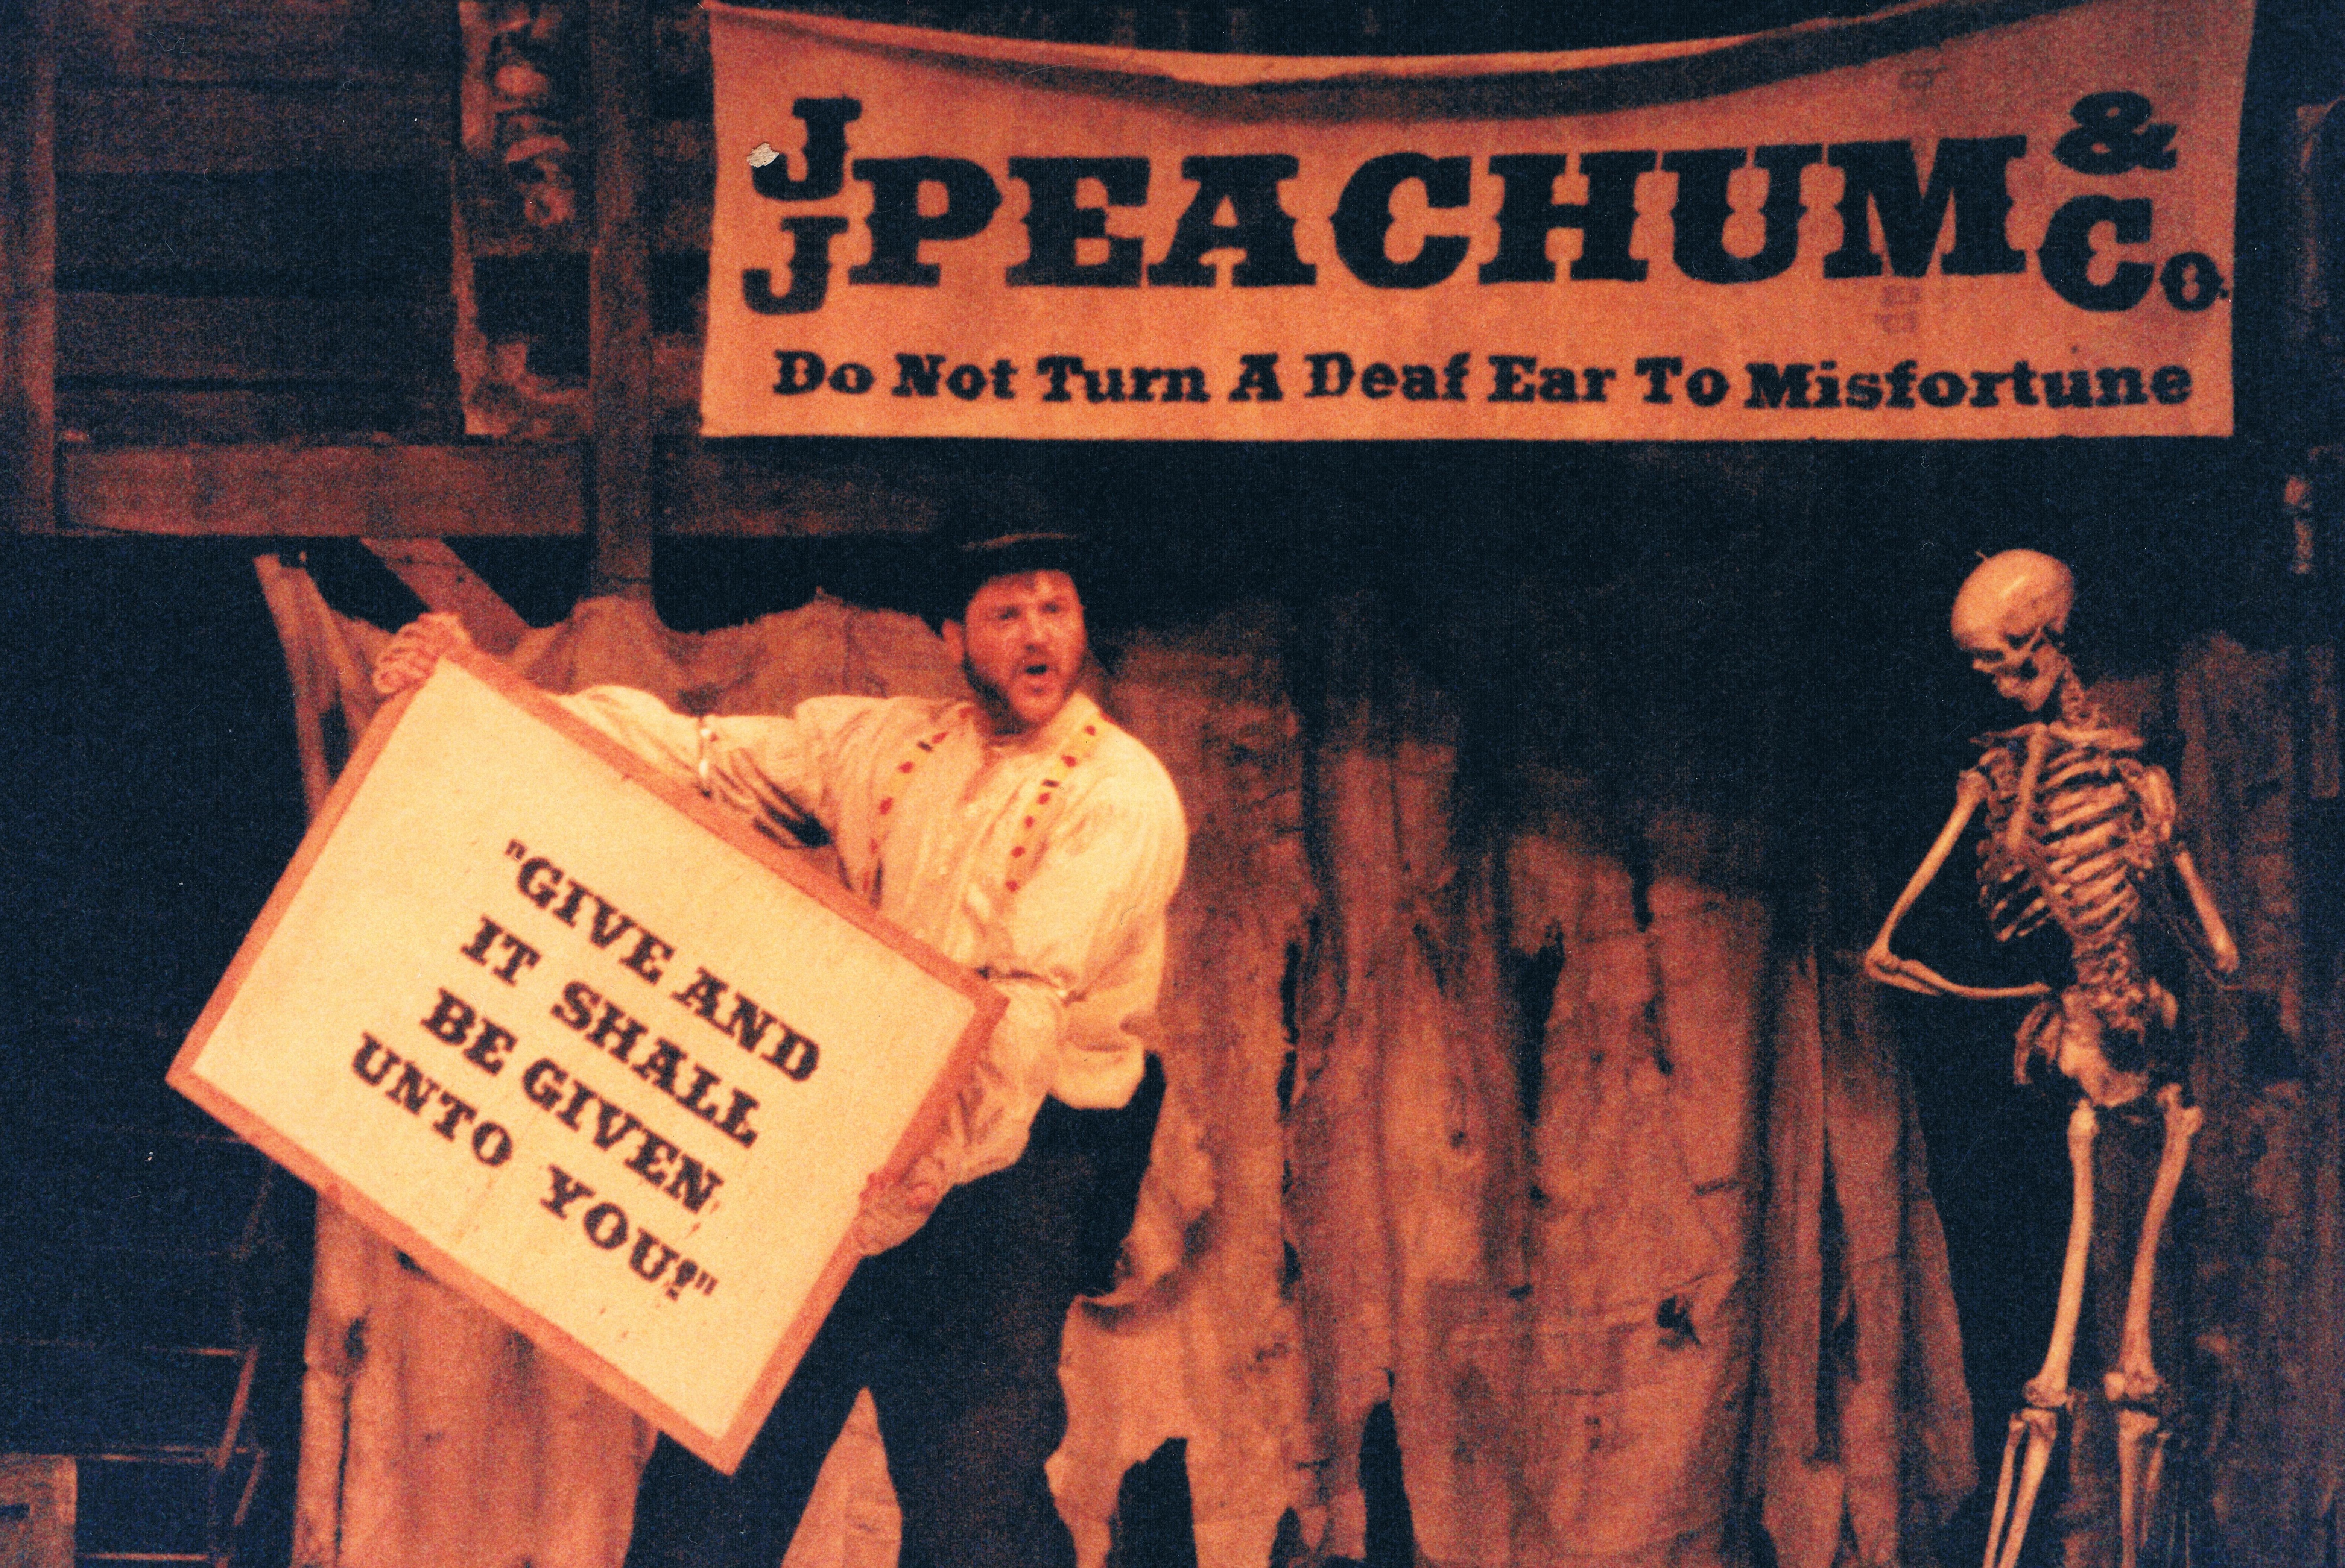 Thom Sears, as Mr. Peachum in the Bertolt Brecht musical, 